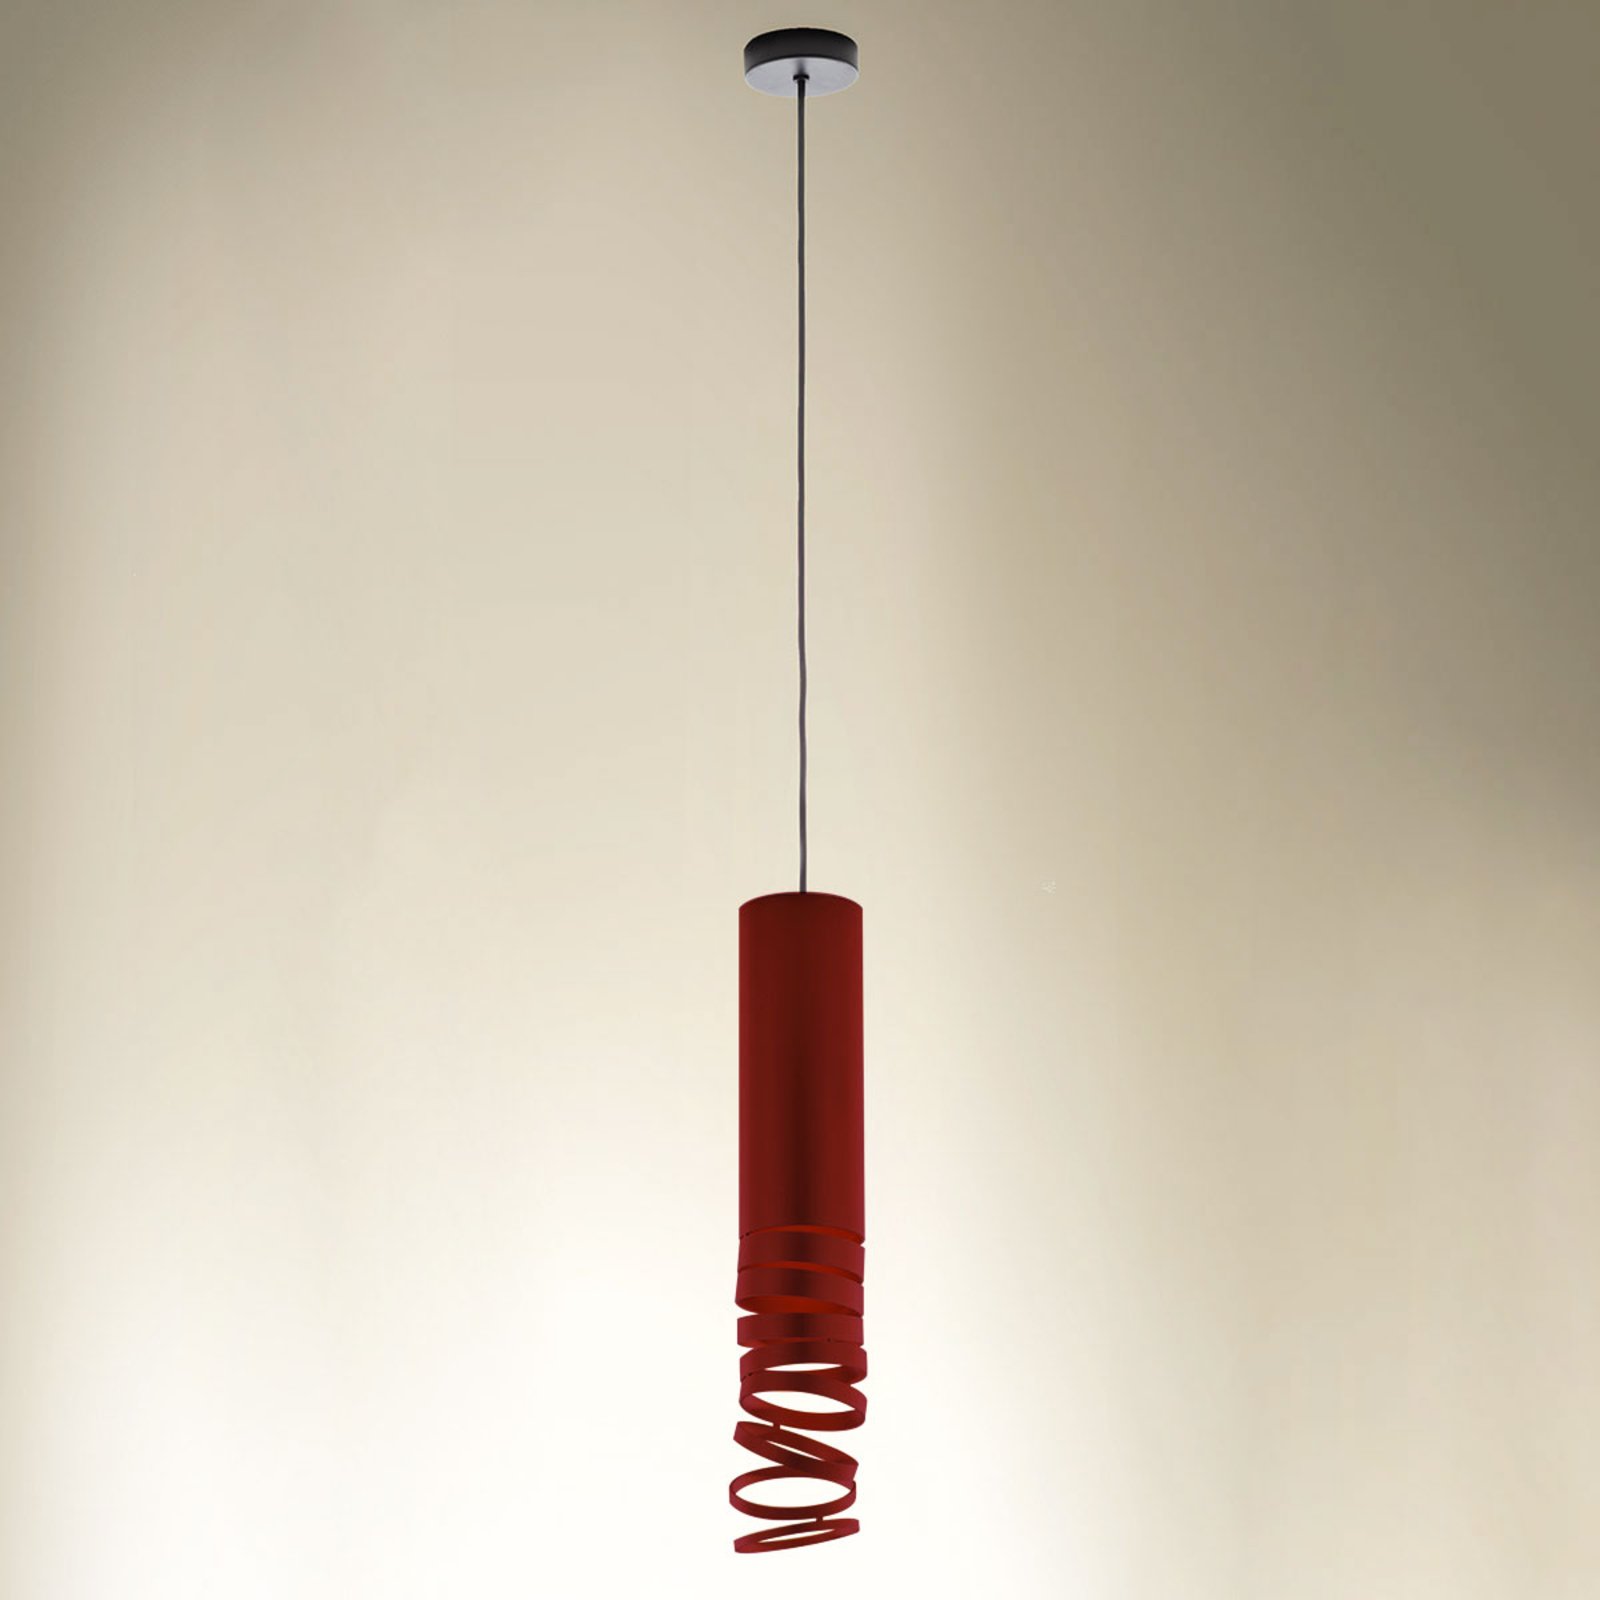 Artemide Decomposé hanglamp rood